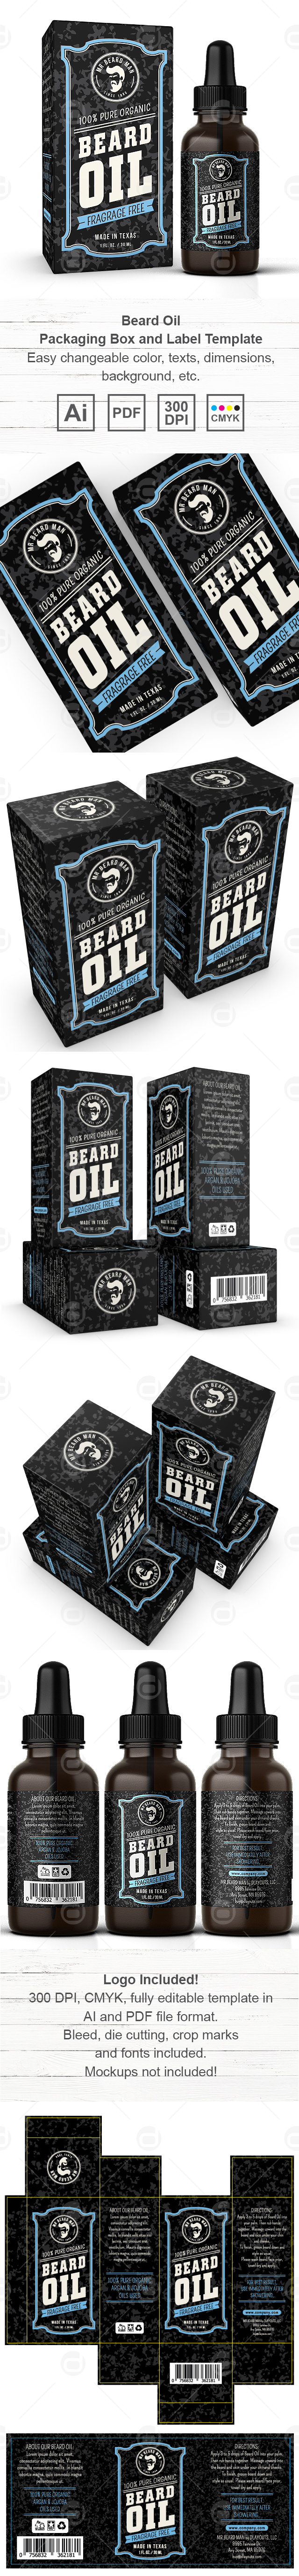 Beard Oil Packaging & Label Template